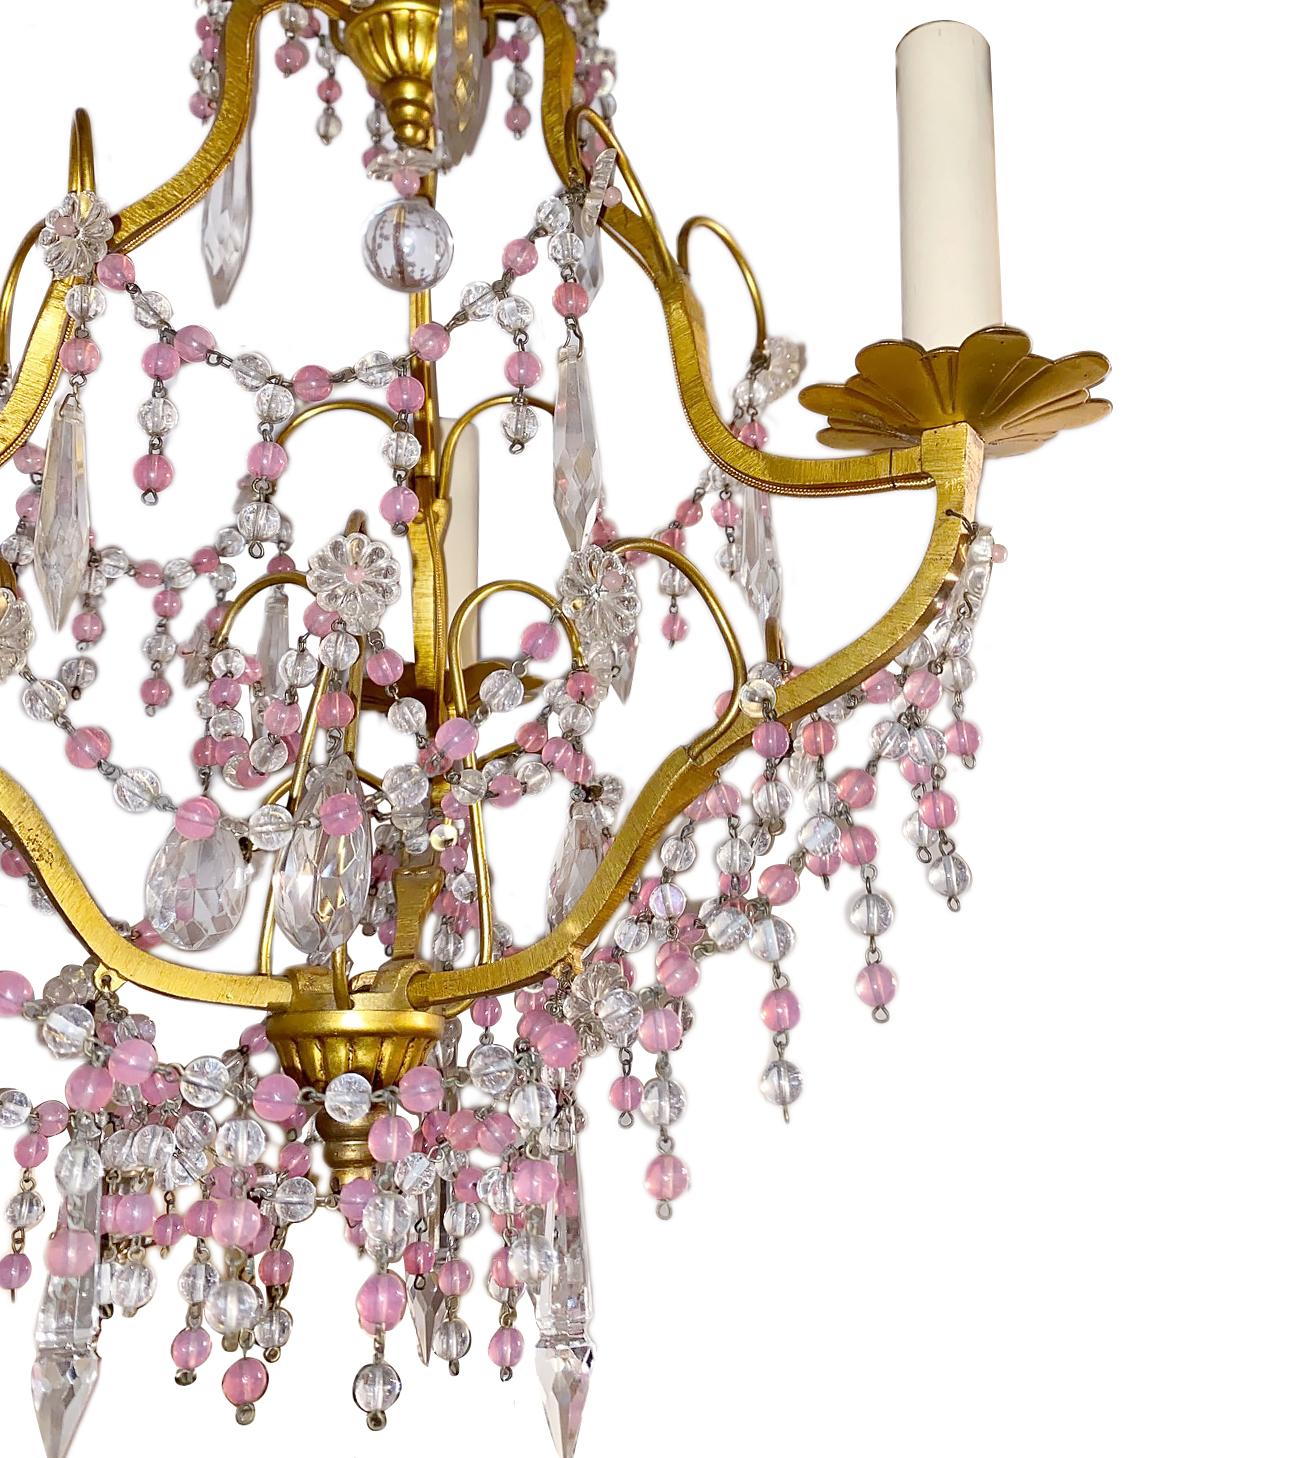 A circa 1920s three-arm Italian gilt metal and glass bead chandelier.

Measurements:
Height 24